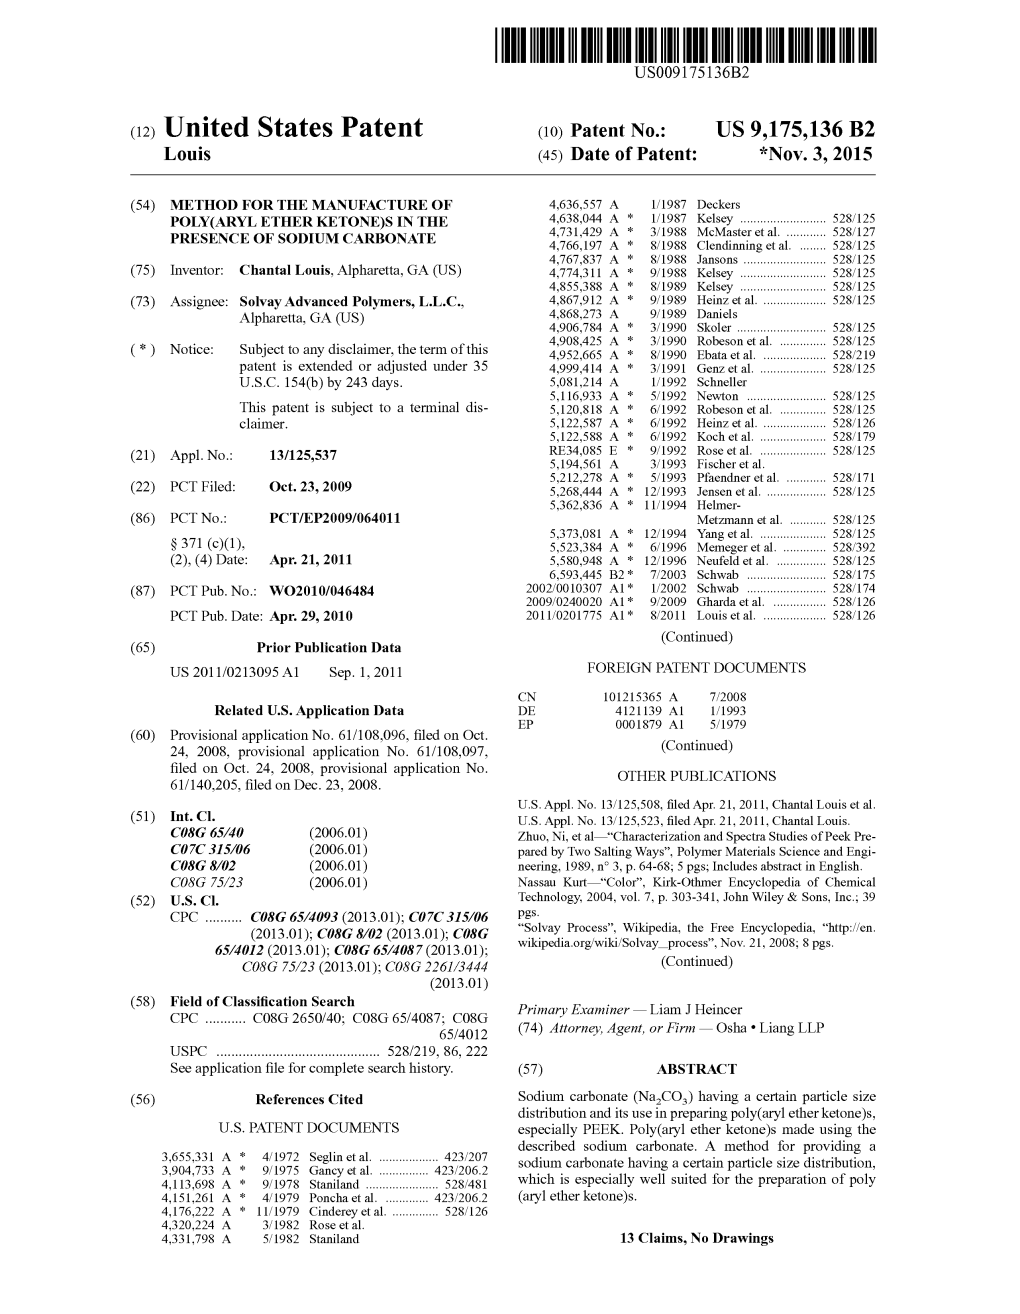 United States Patent (10) Patent No.: US 9,175,136 B2 Louis (45) Date of Patent: *Nov